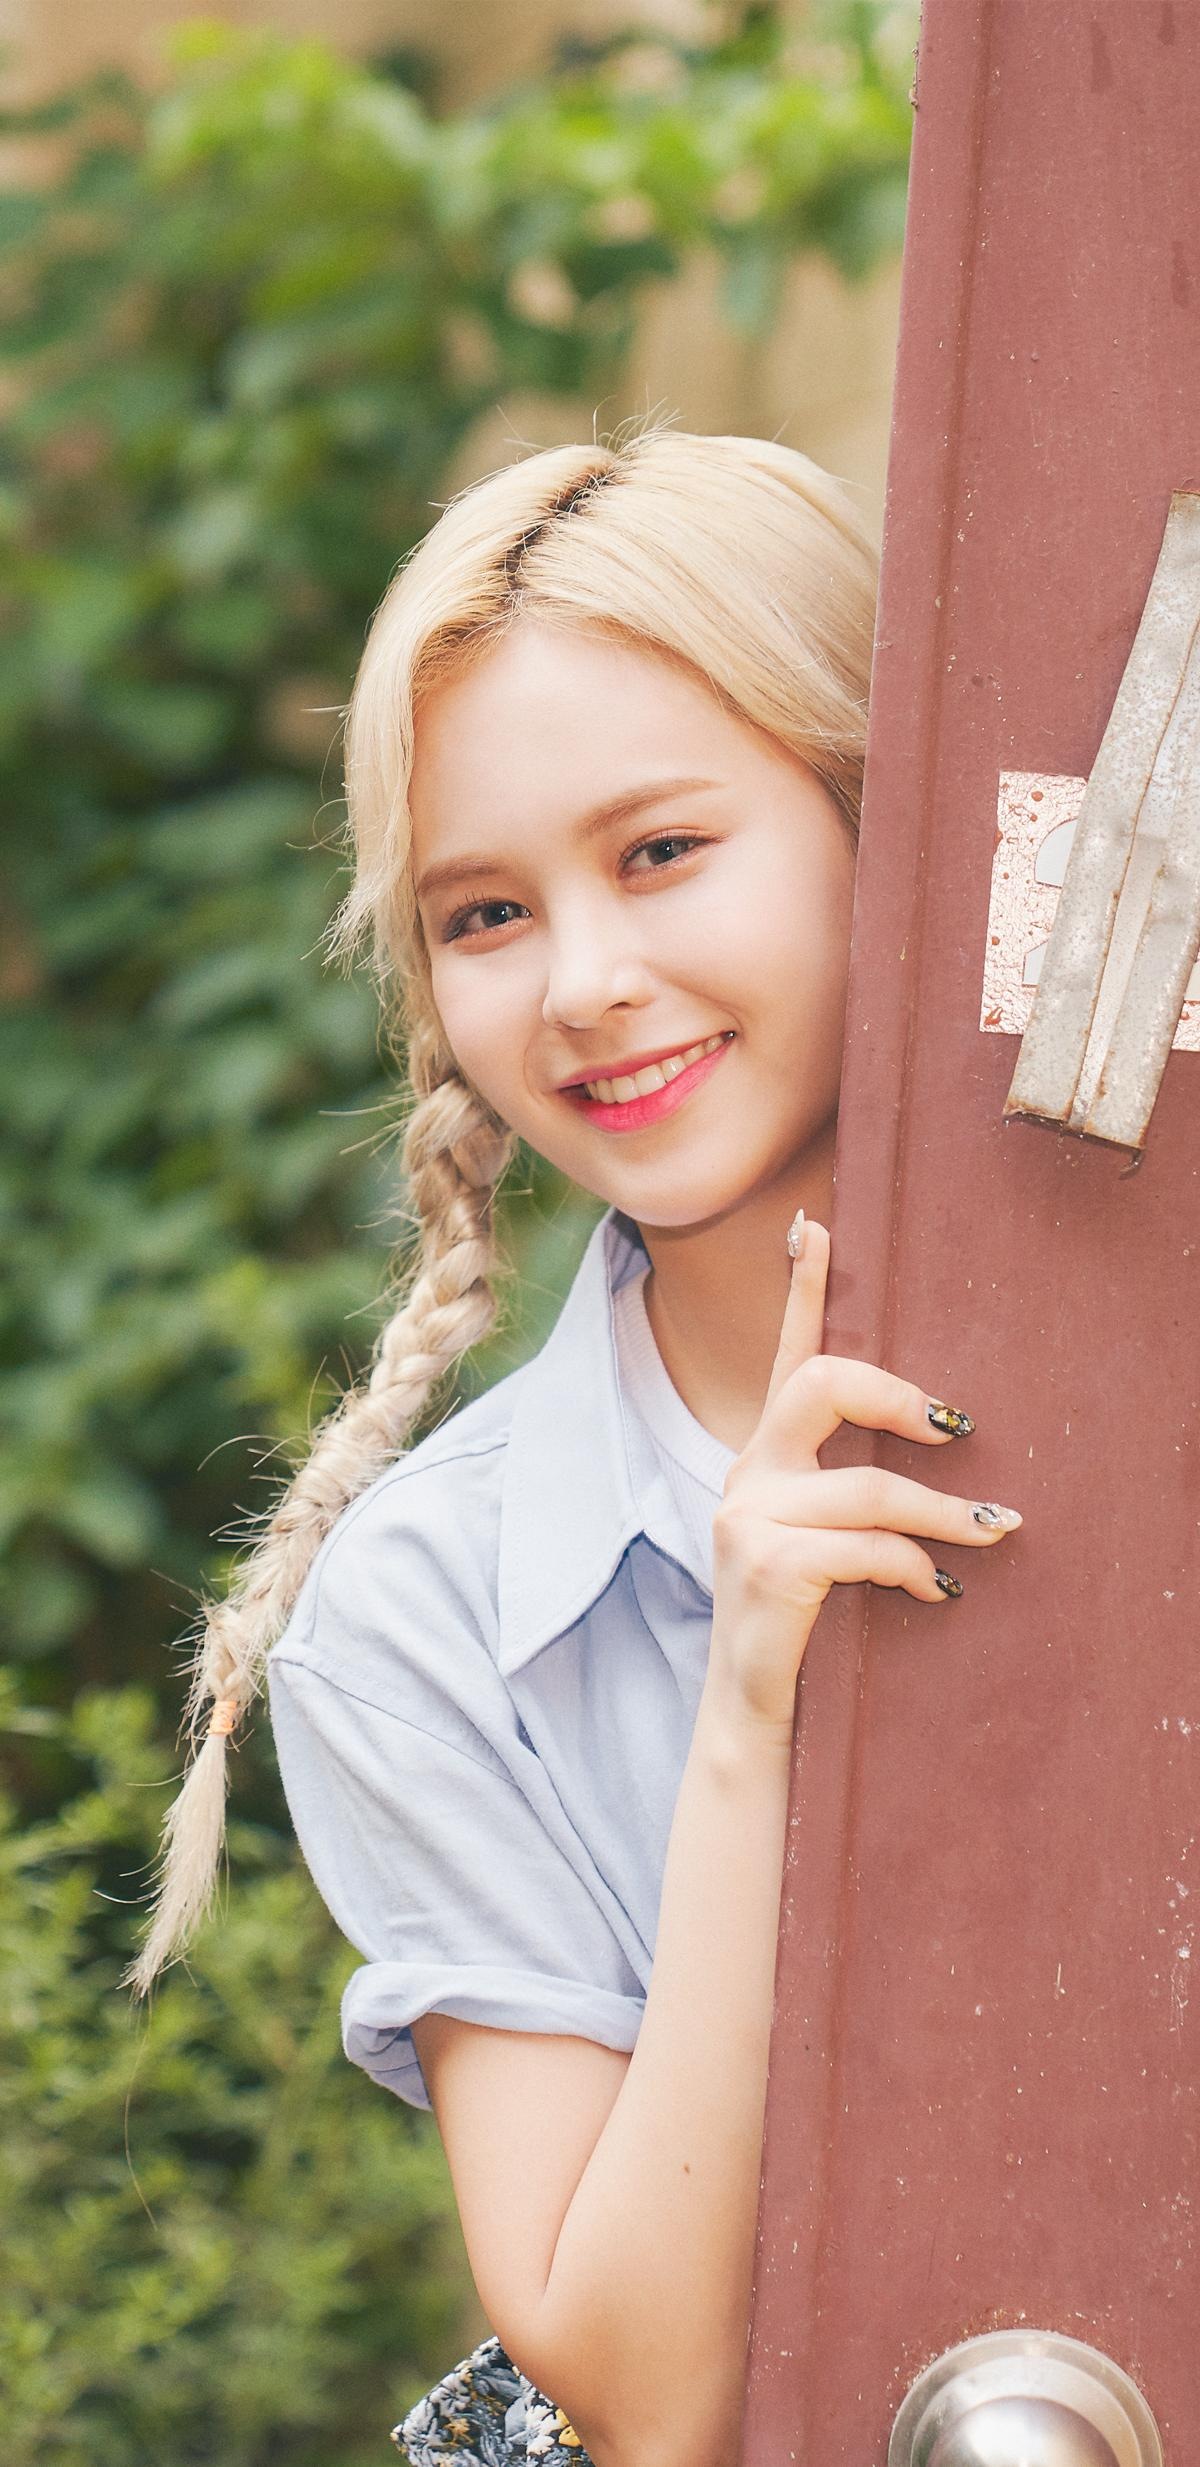 EVERGLOW K Pop E U Park Jiwon Smiling Dyed Hair Asian Women Painted Nails Blonde Braided Hair Women  1200x2467